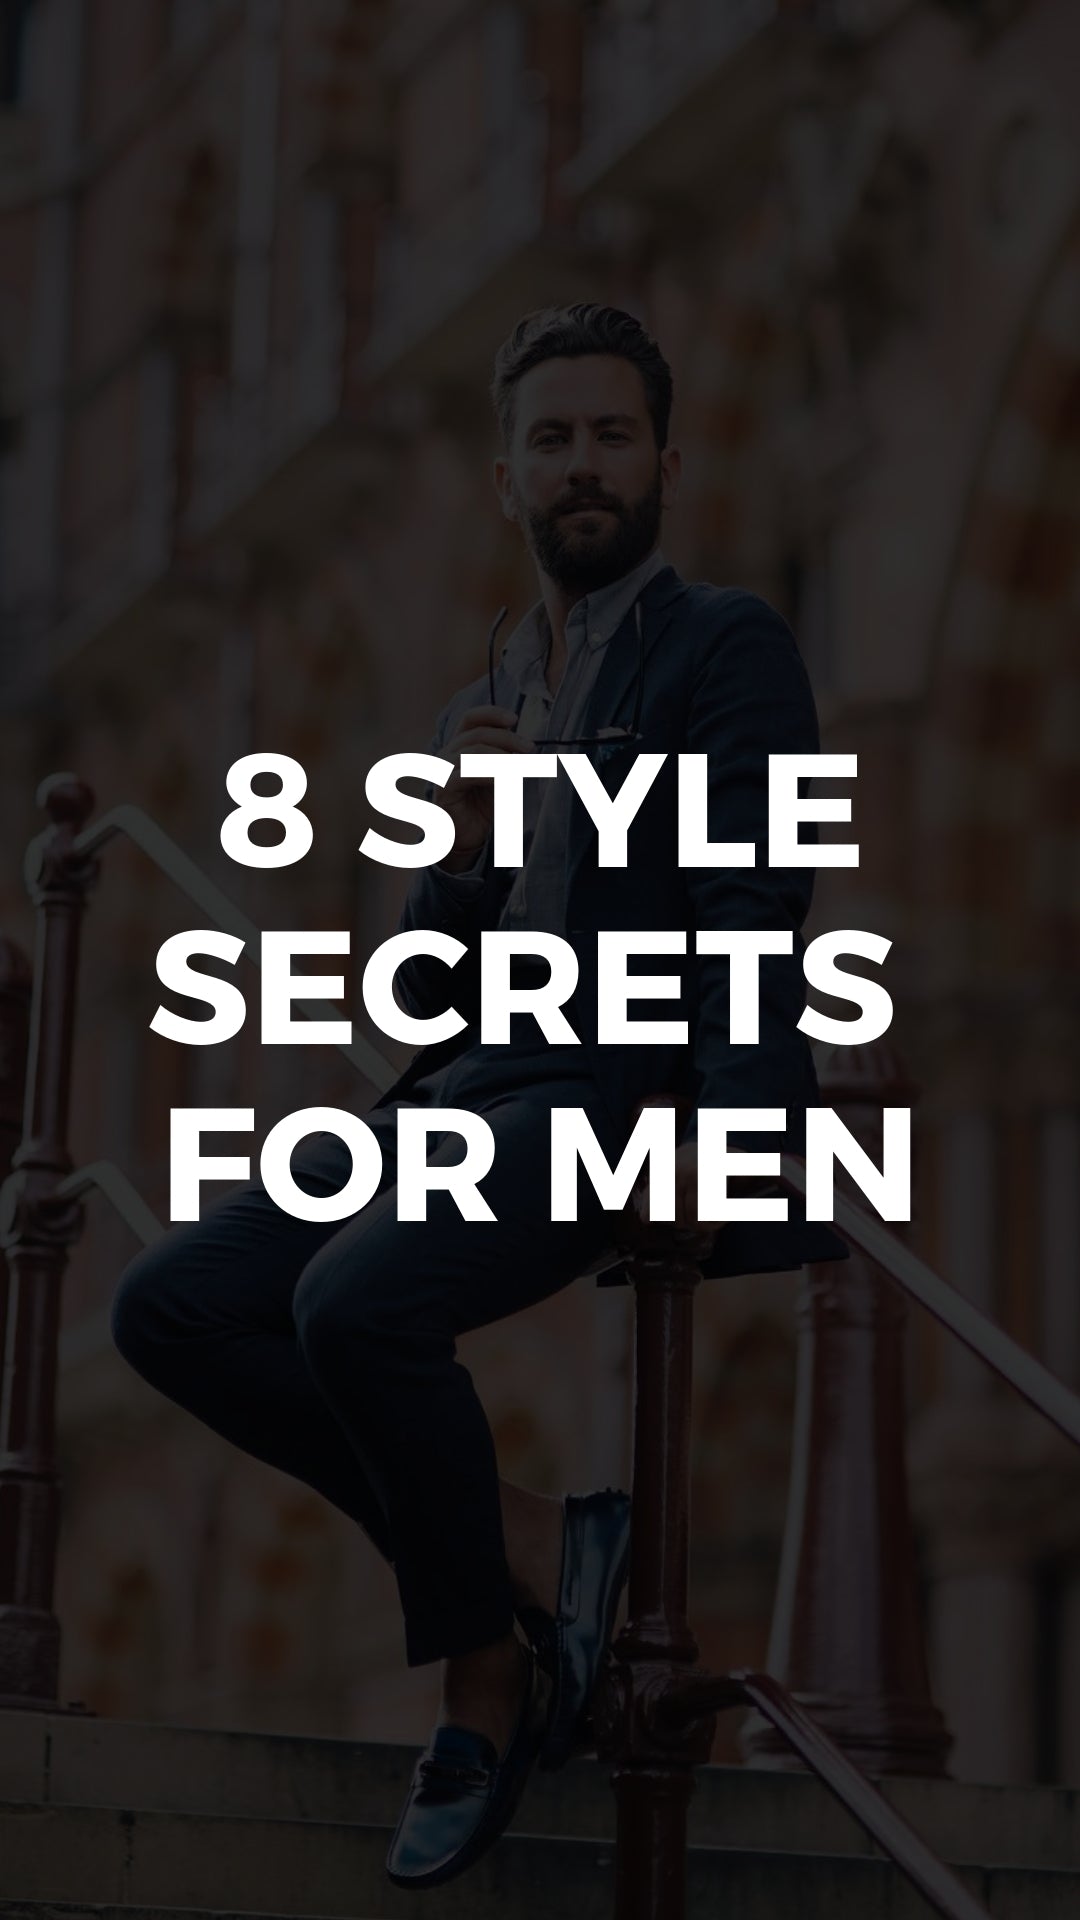 8 Things All Stylish Guys Secretly Do - Men's Fashion Secrets #mensfashion #fashiontips #styletips